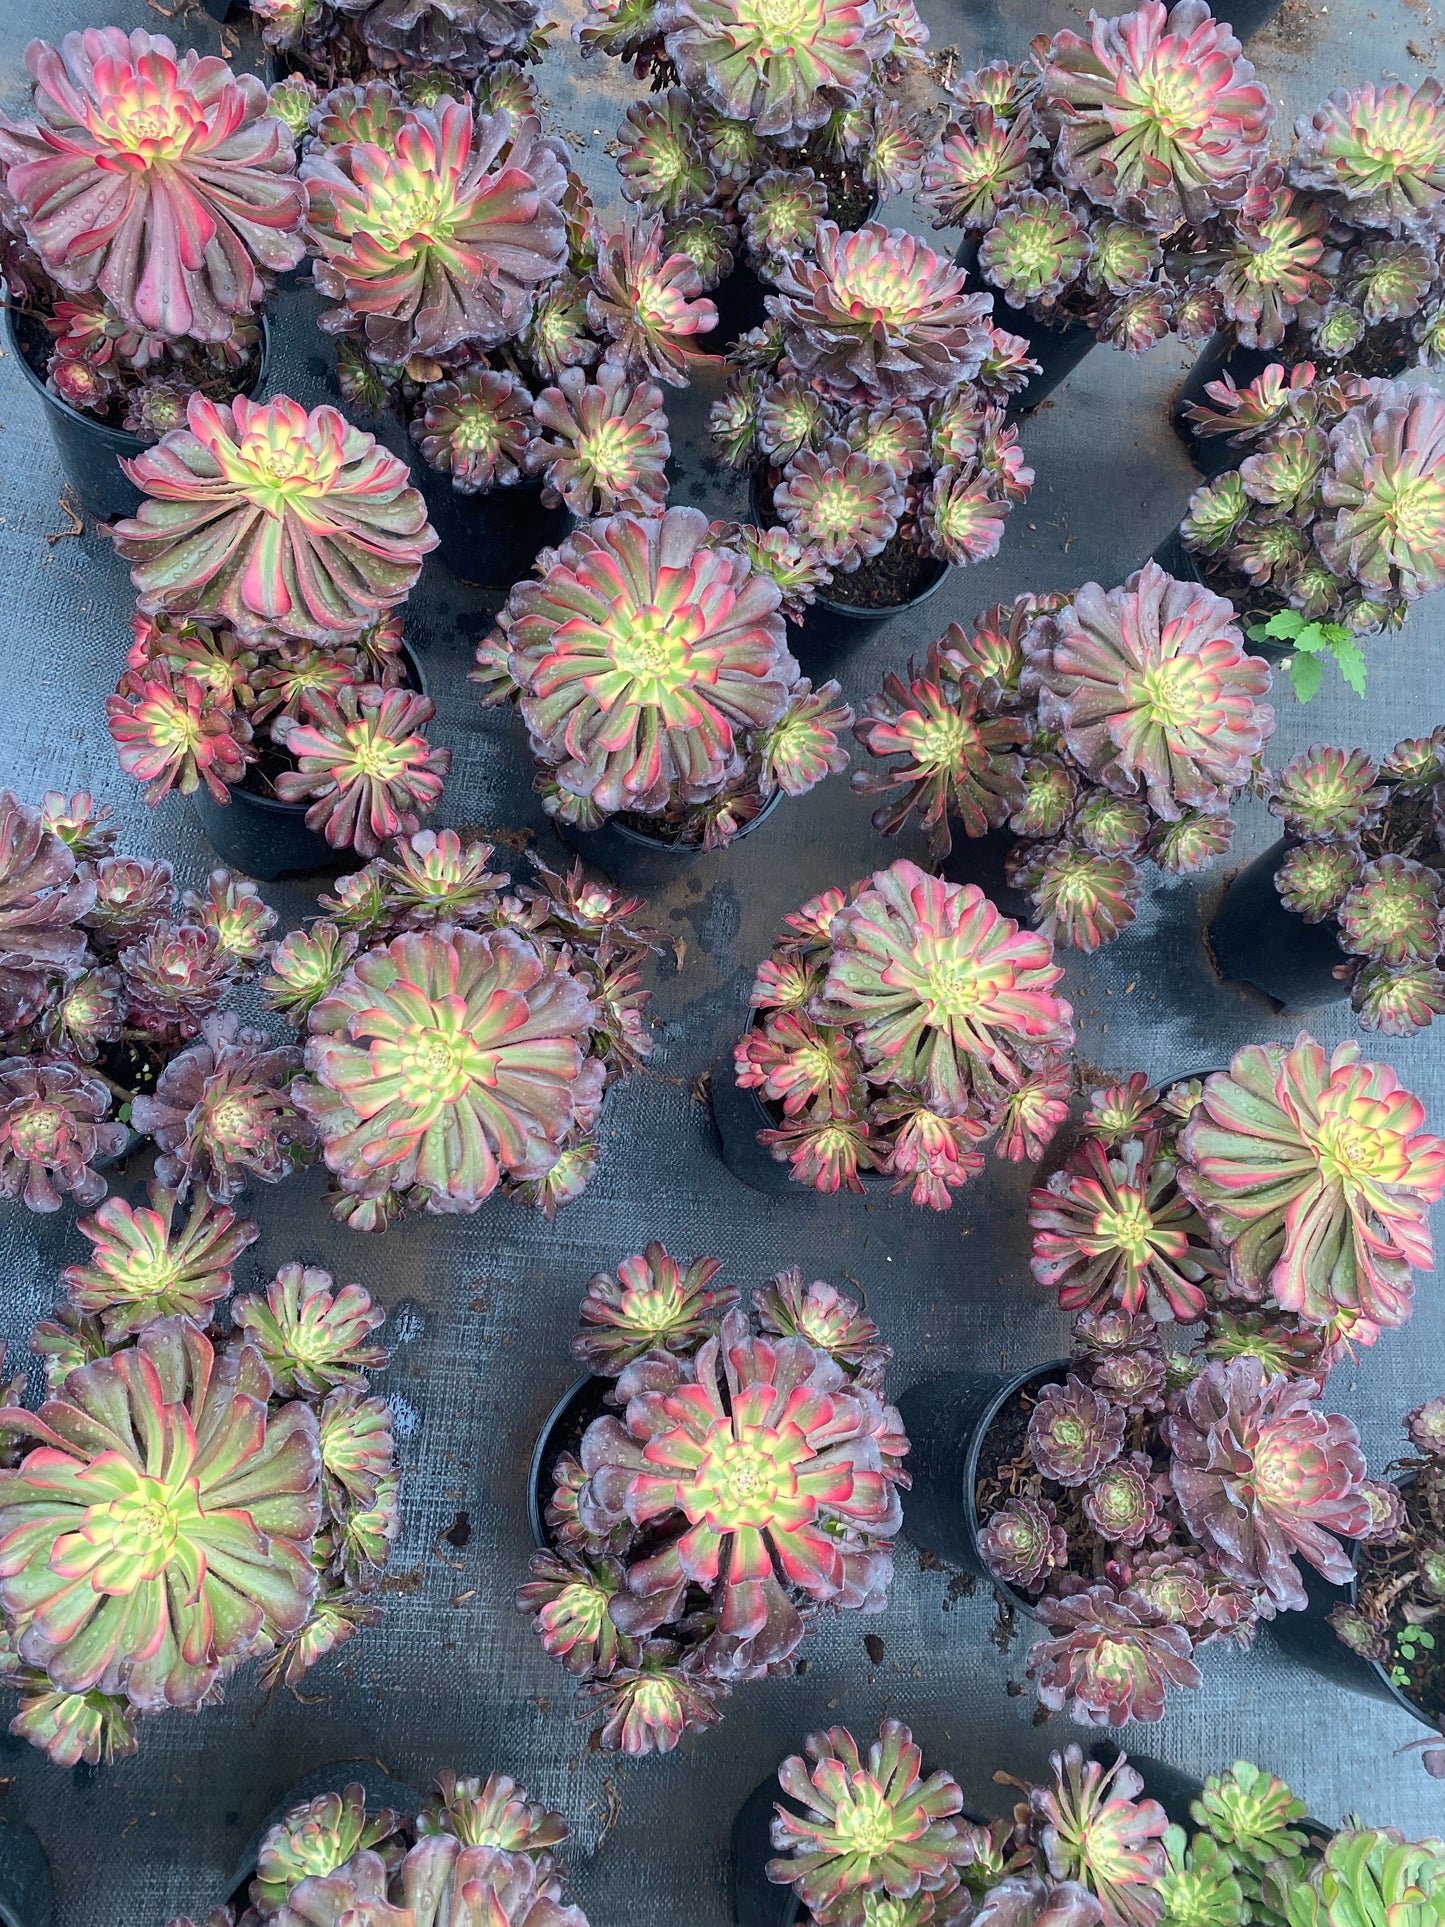 Yuechan cluster20-25cm/ 8-15 heads/ Aeonium cluster/ Variegated Natural Live Plants Succulents